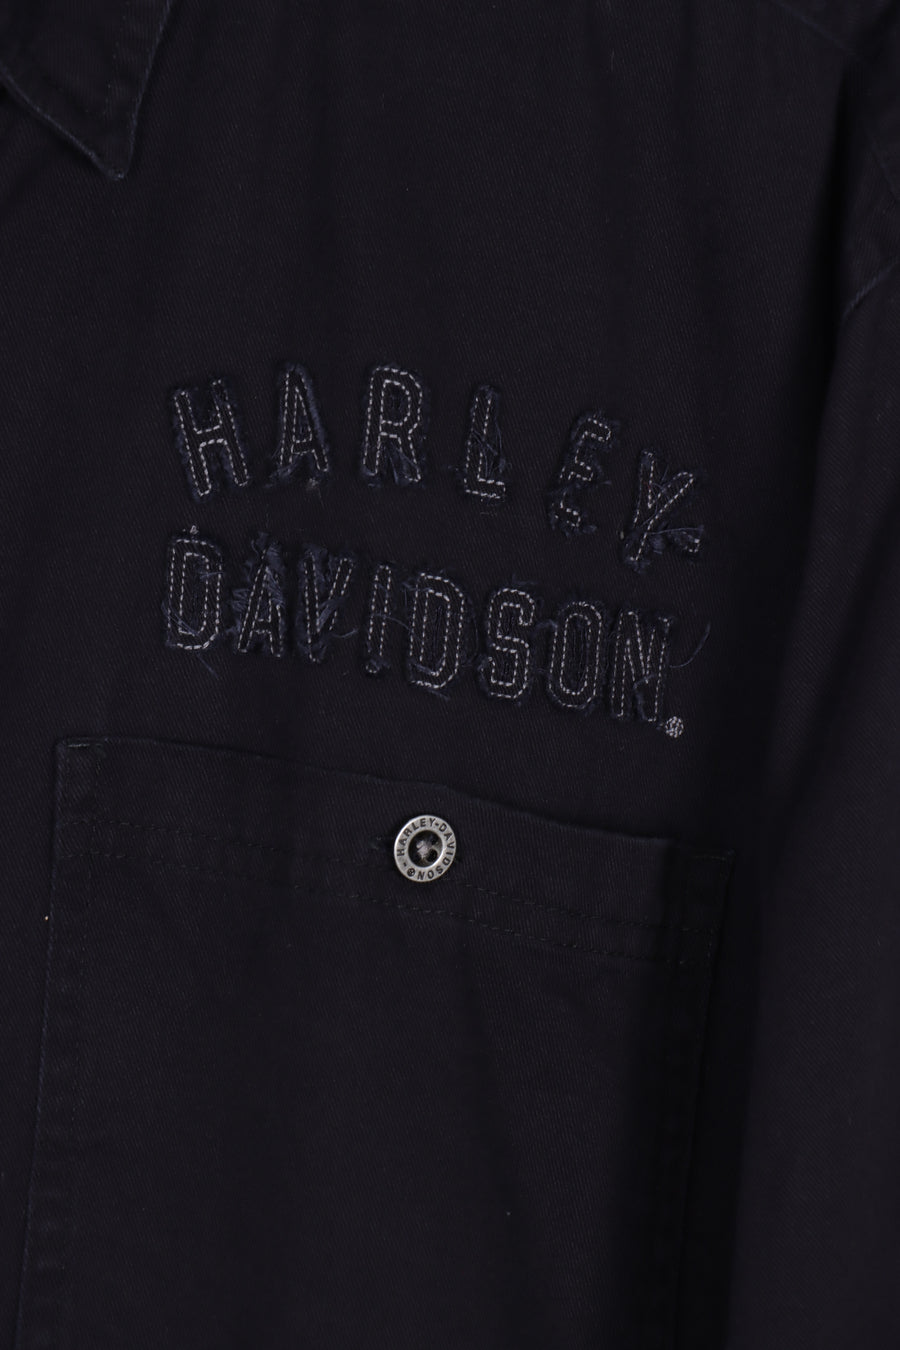 HARLEY DAVIDSON Embroidered Black Wings Long Sleeve Shirt (L)